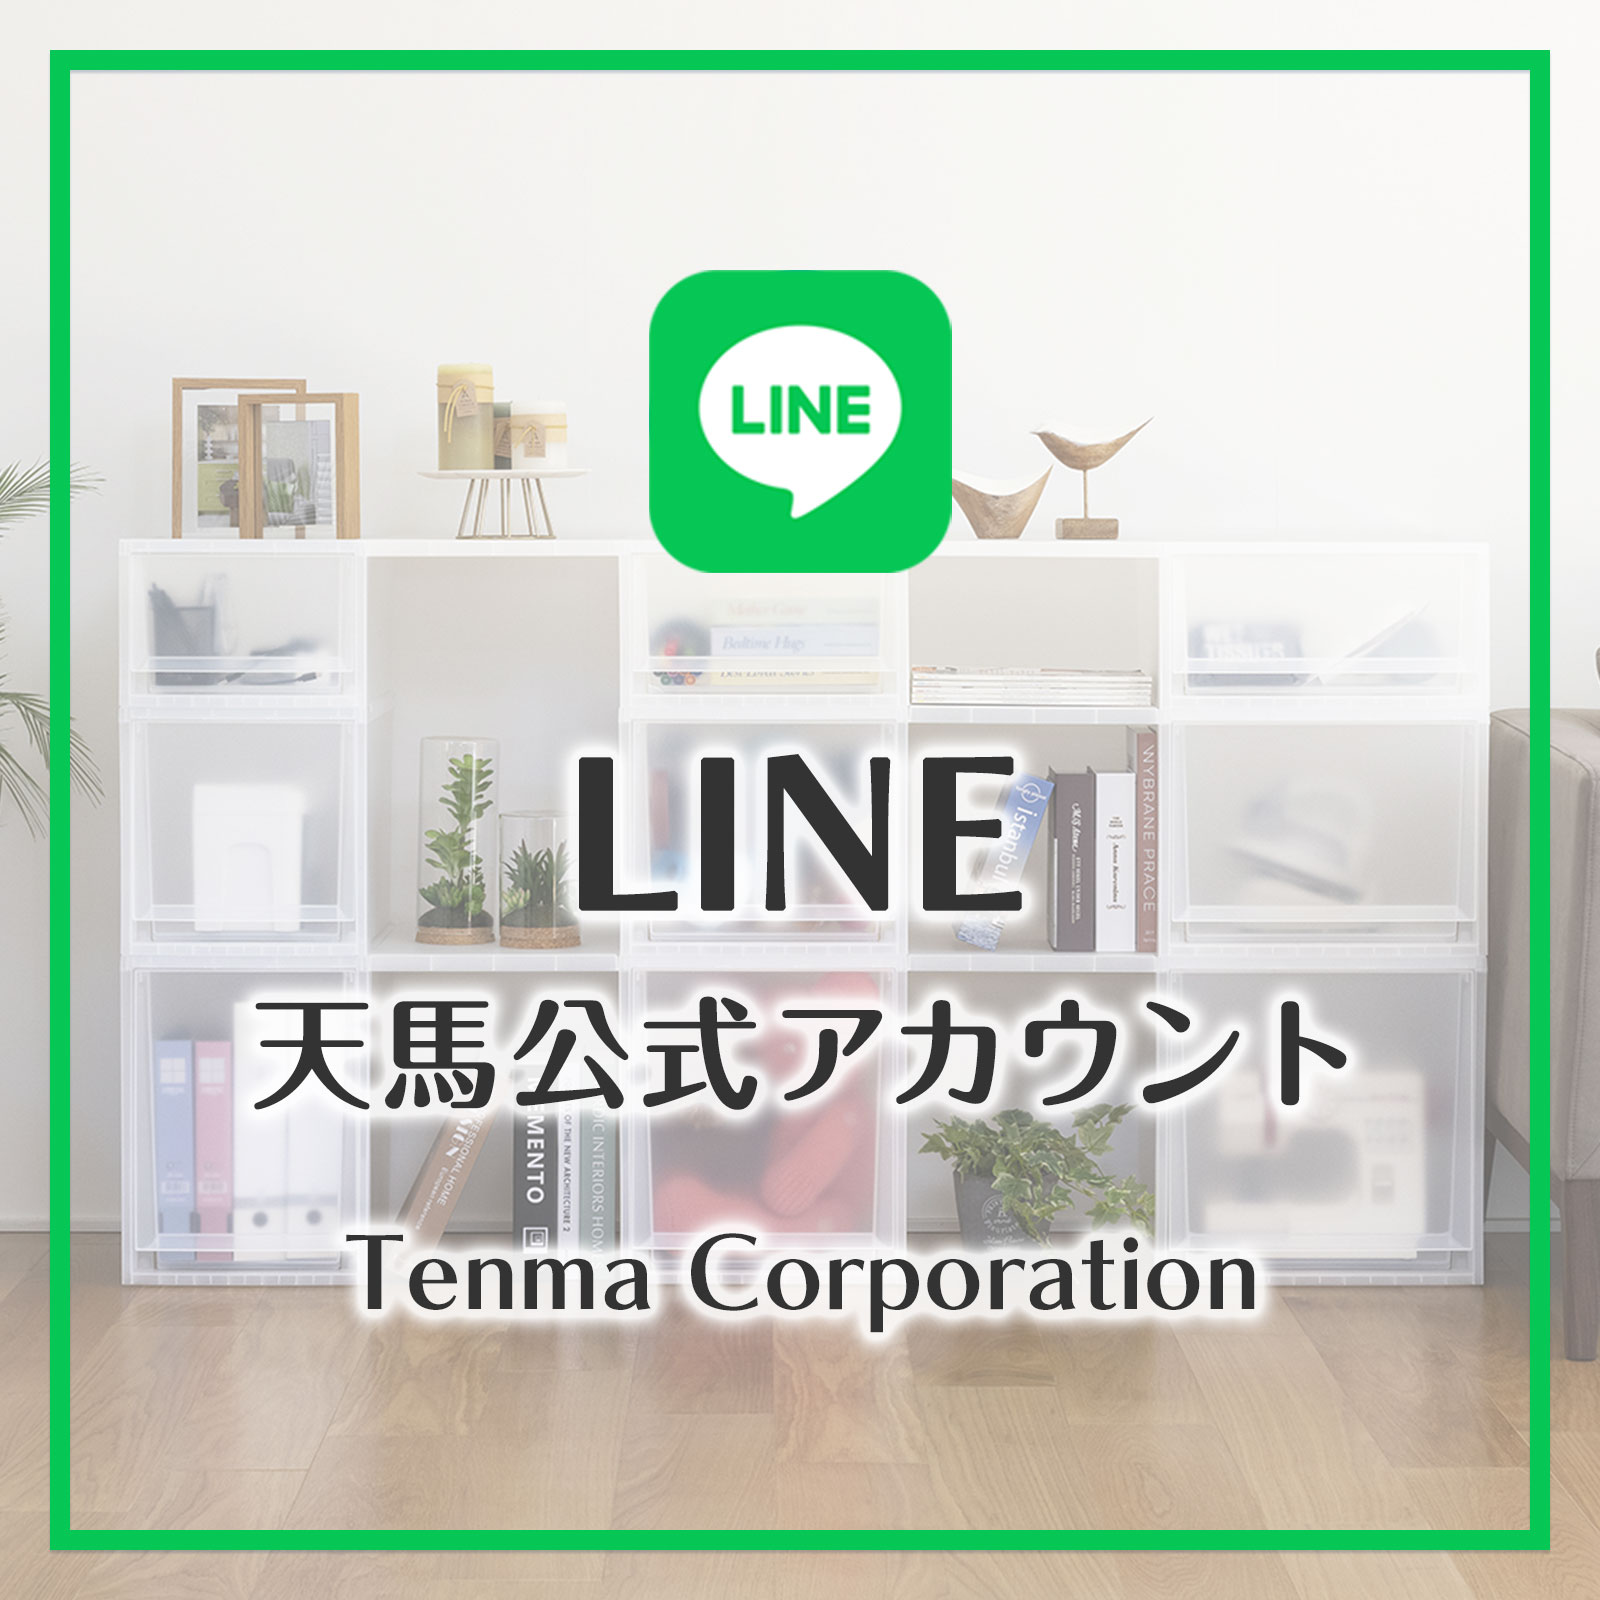 Tenma Corporation